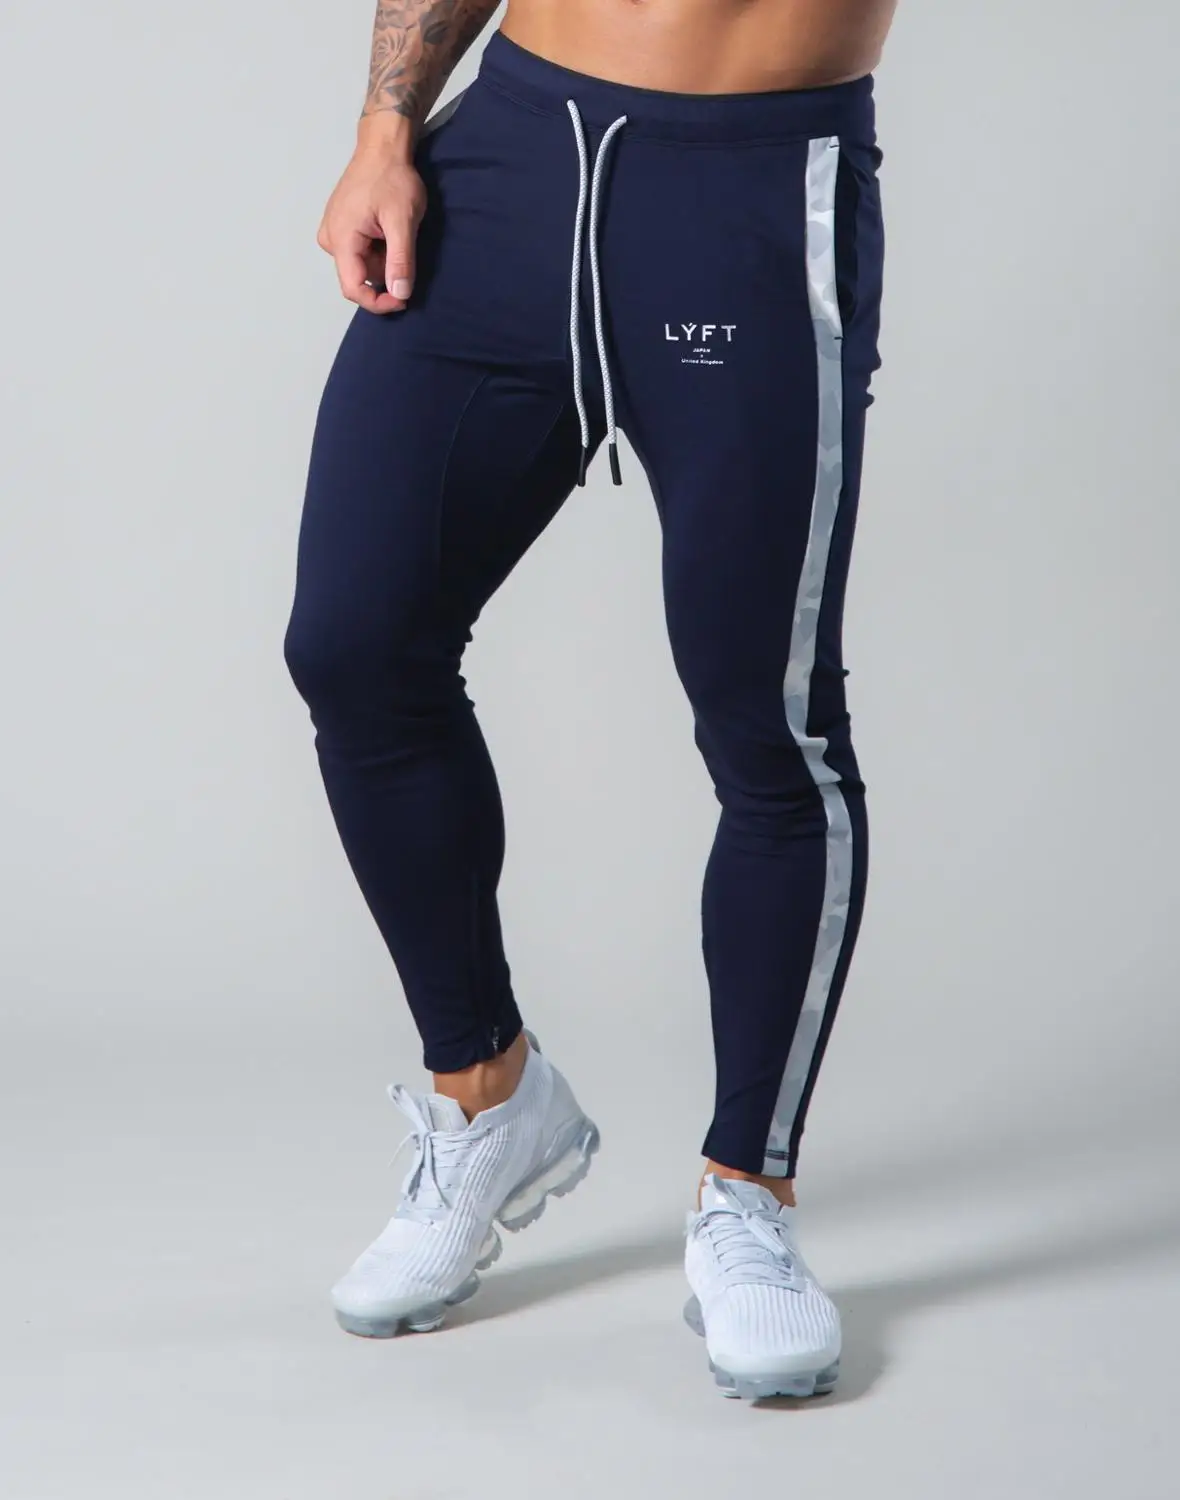 JP&UK Cotton Gym Pants Men Slim Fit Running Jogging Pants Mens Bodybuilding Sweatpants Training Sport Pants Fitness Trousers